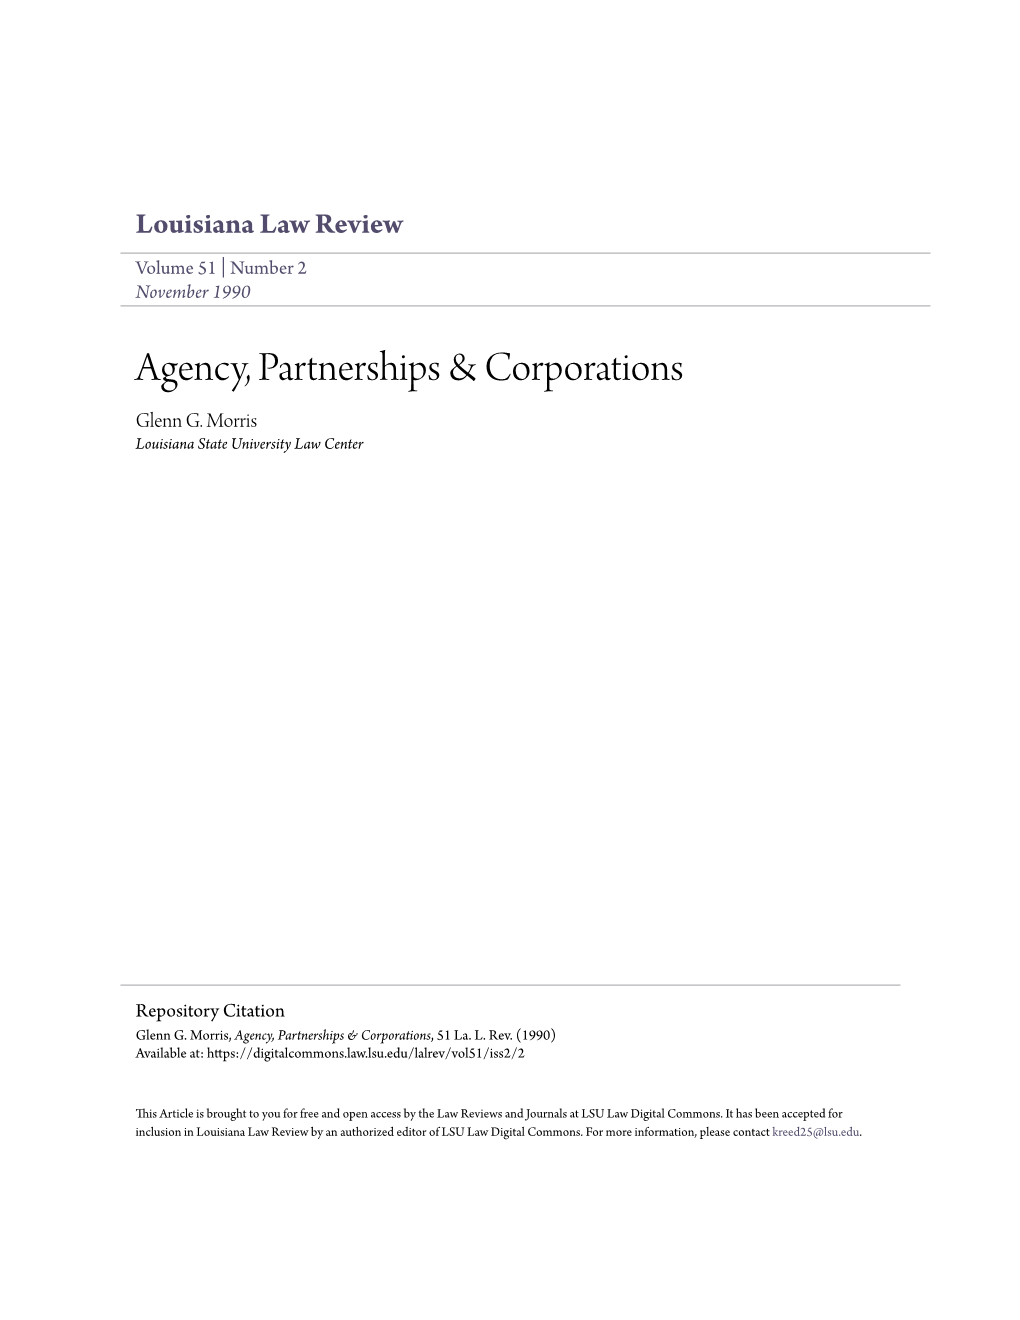 Agency, Partnerships & Corporations